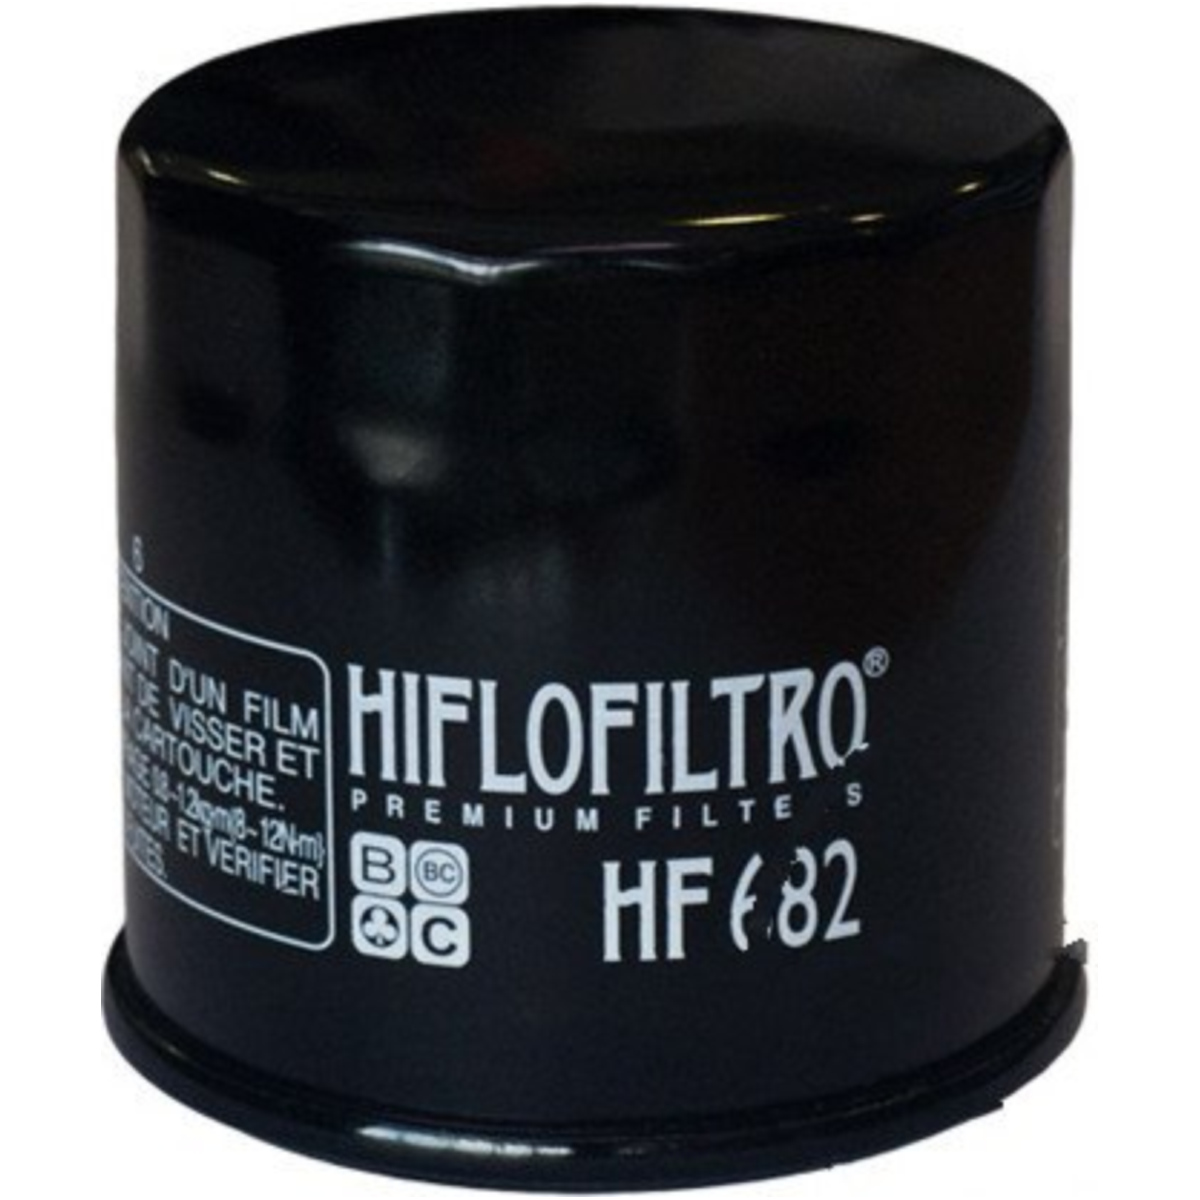 Hiflo hf682 Ölfilter hiflo von HIFLO